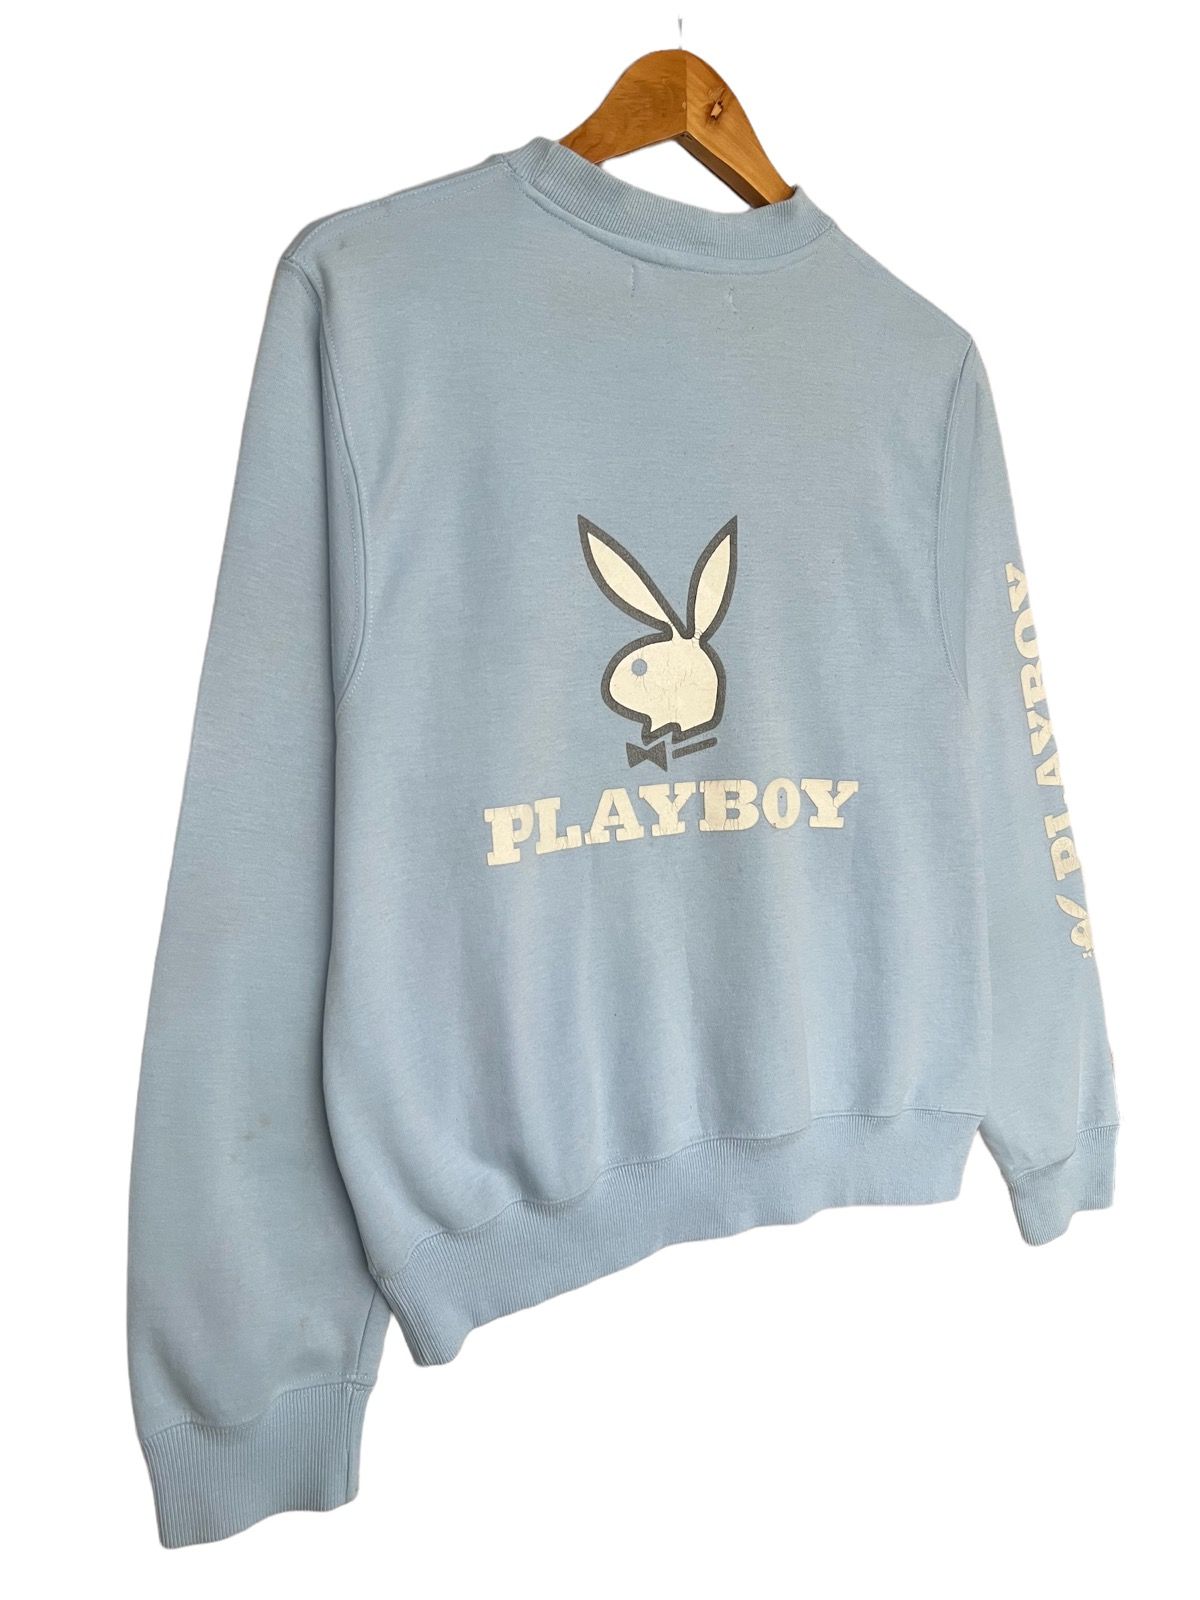 Vintage Playboy Sweatshirt Baby Blue Sweatshirt - 3